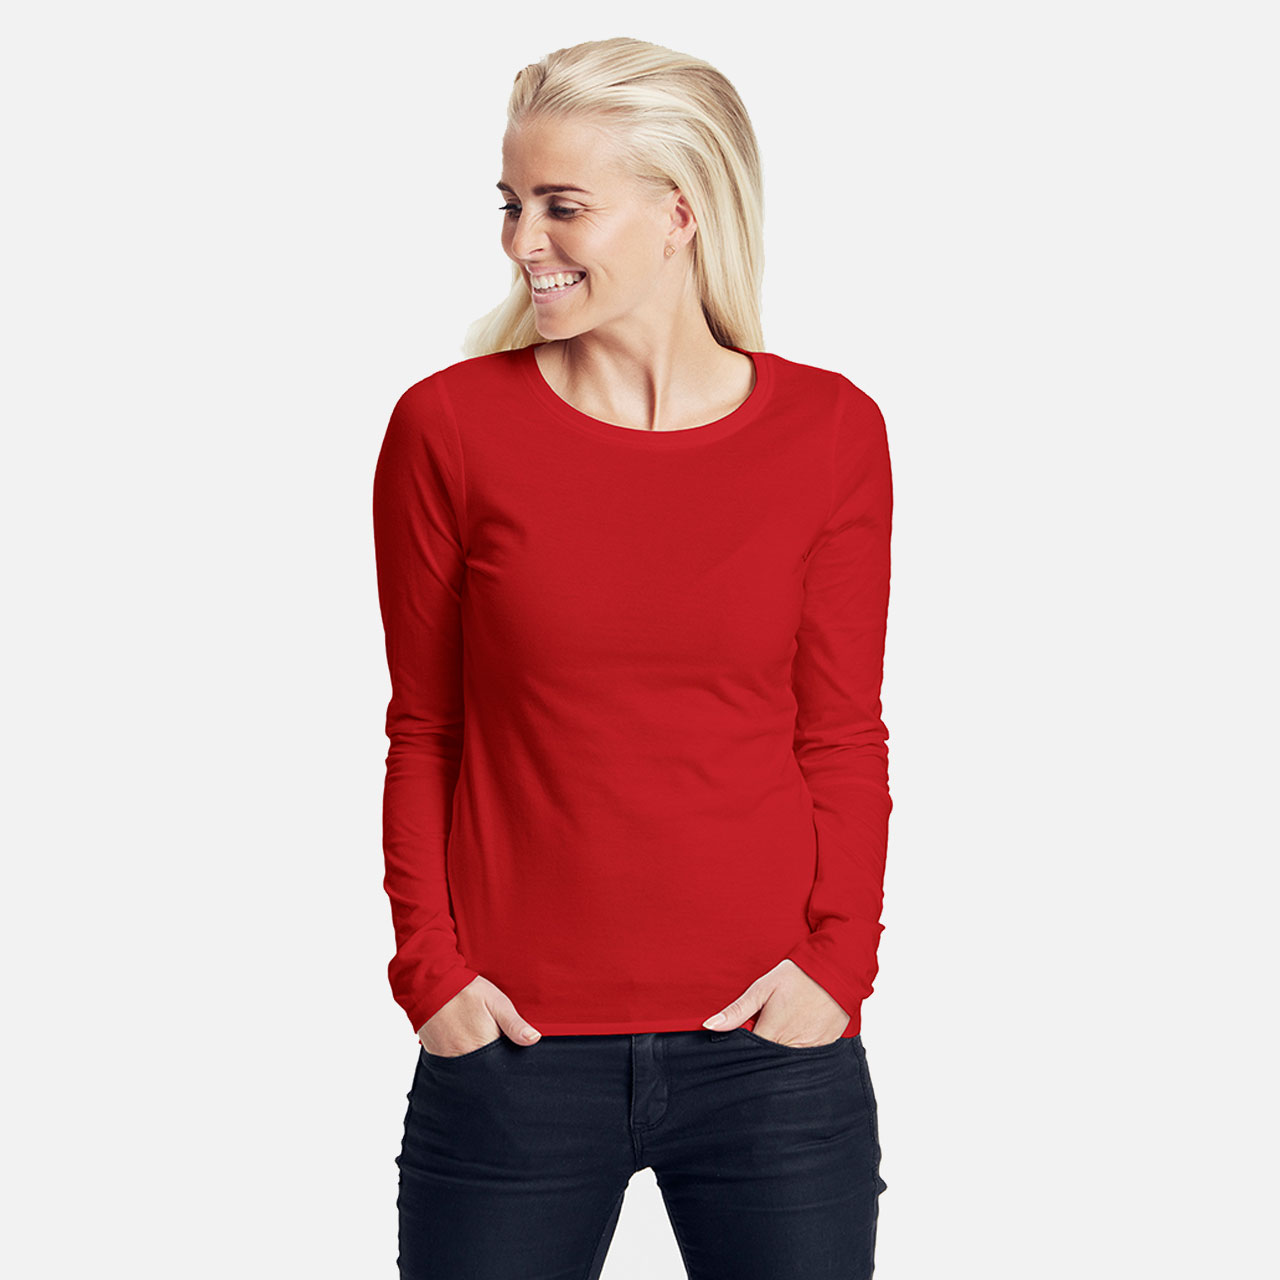 Doppelpack Ladies Long Sleeve Shirt - Rot M Rot